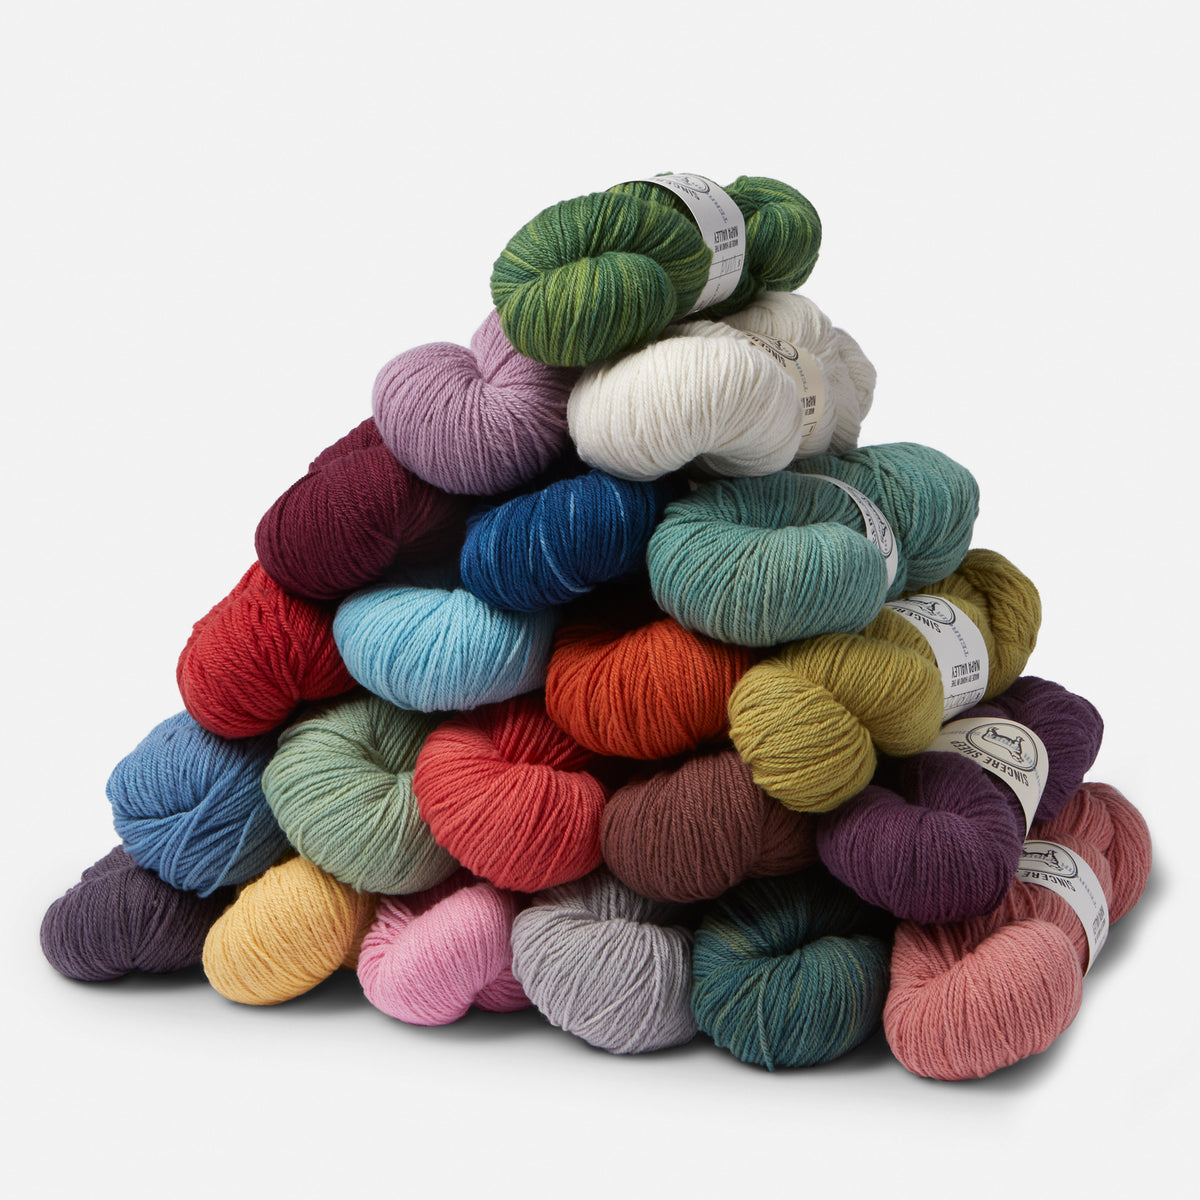 Sincere Sheep Cormo Sport (100% wool) yarn — Row House Yarn